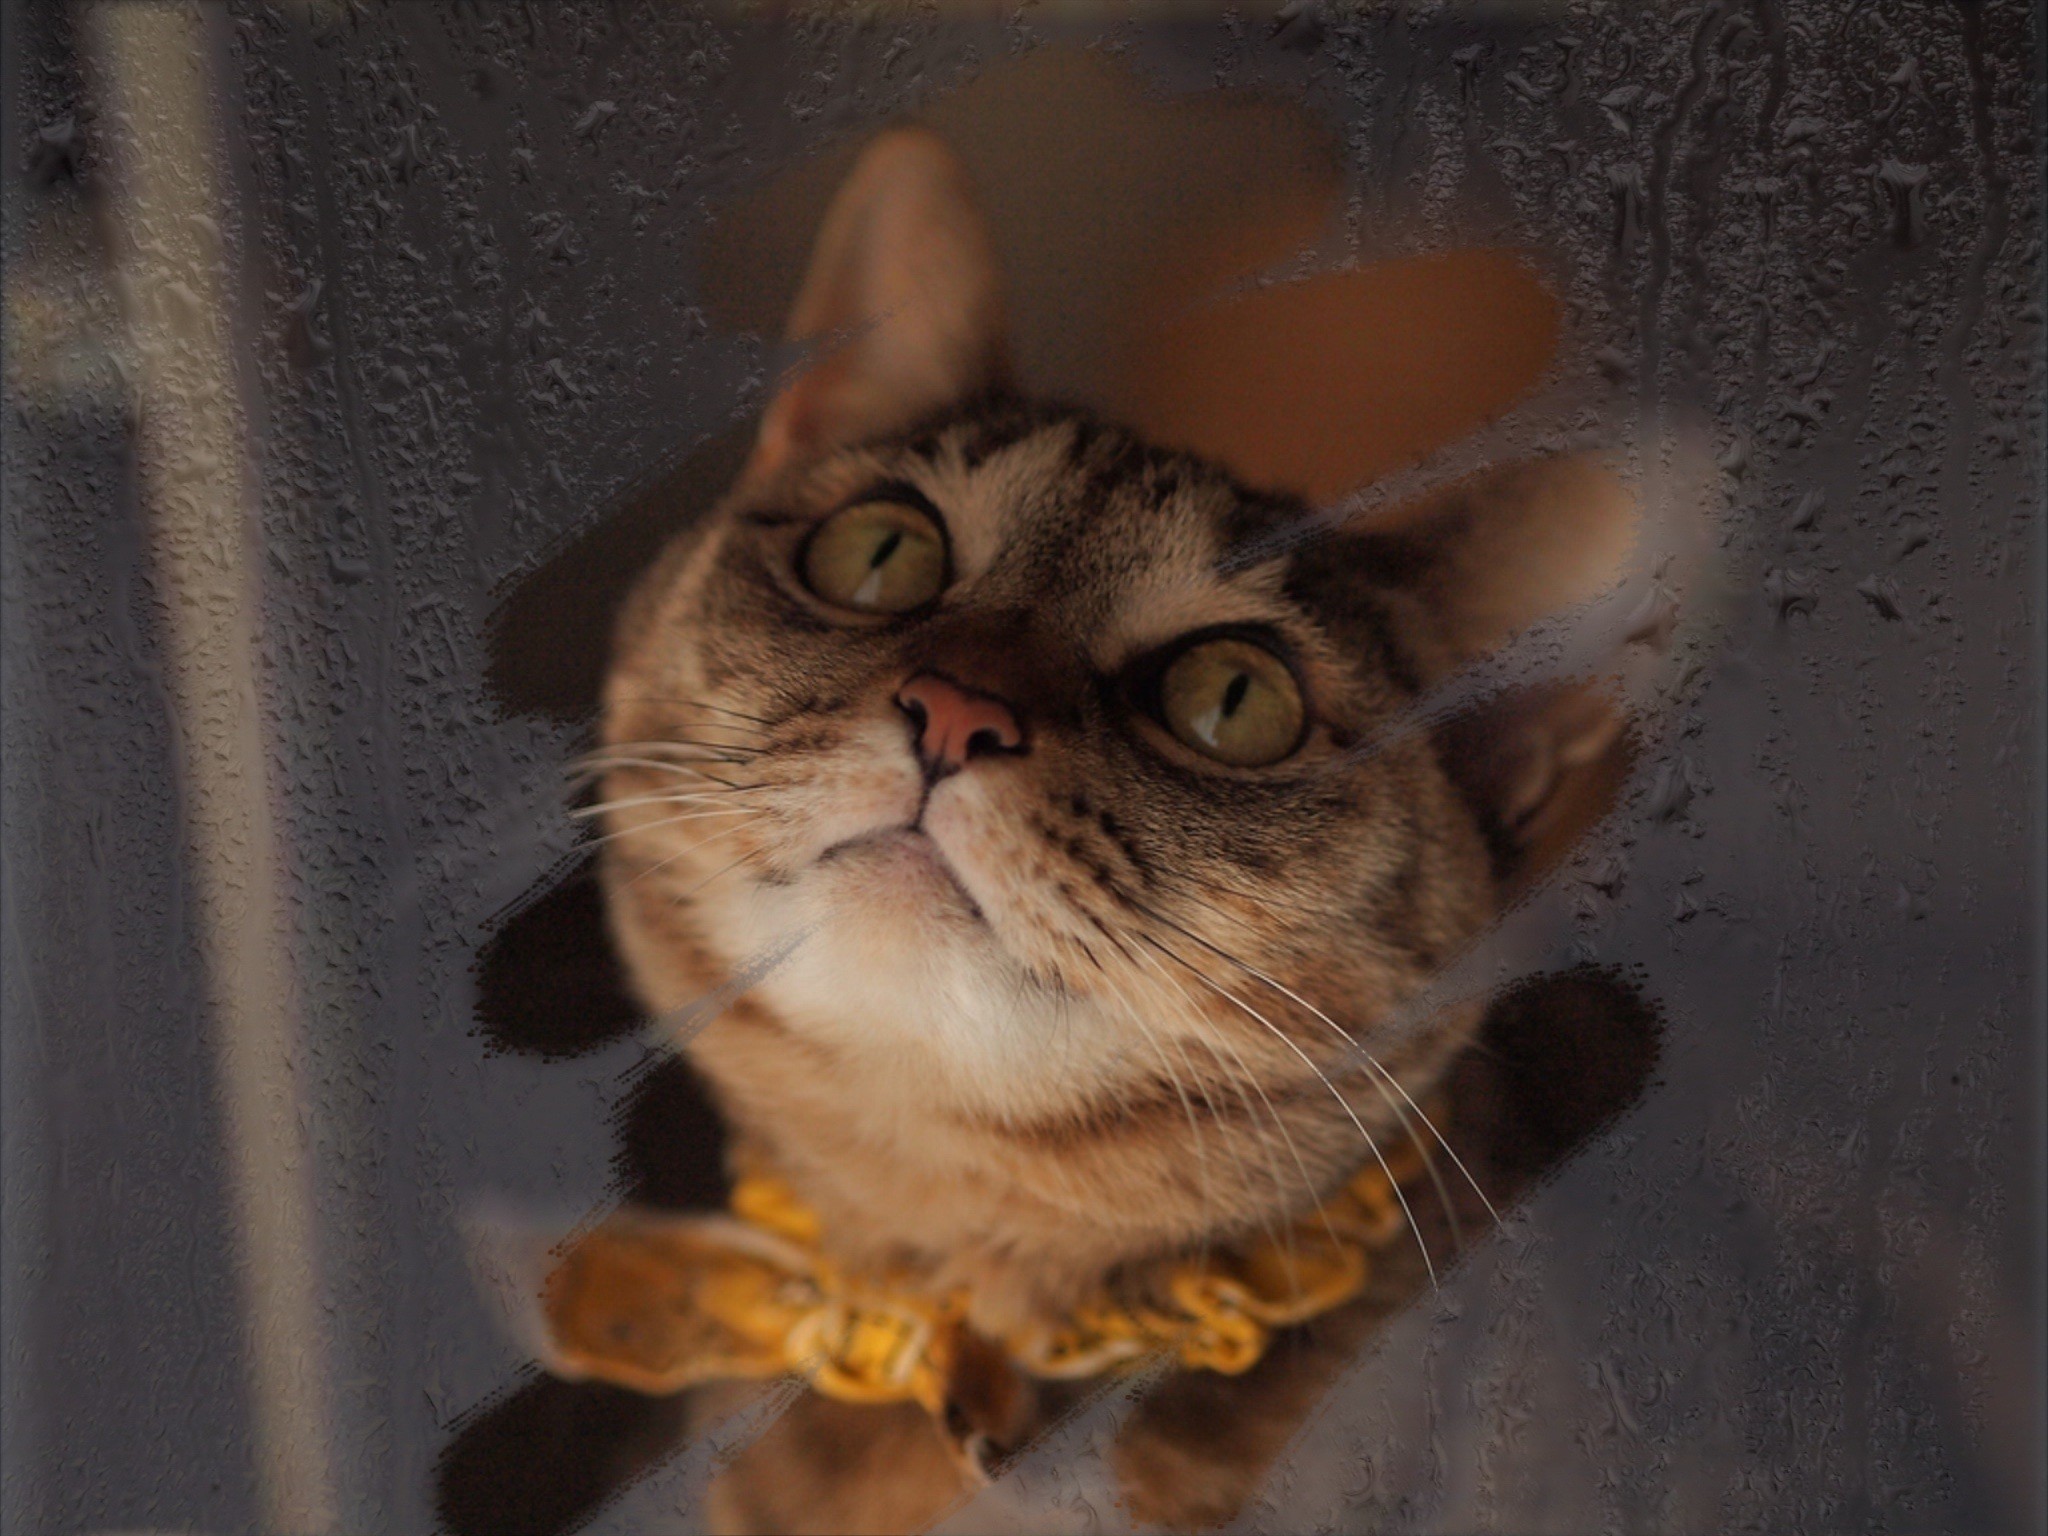 General 2048x1536 yellow eyes cats condensation window indoors feline mammals animals animal eyes closeup